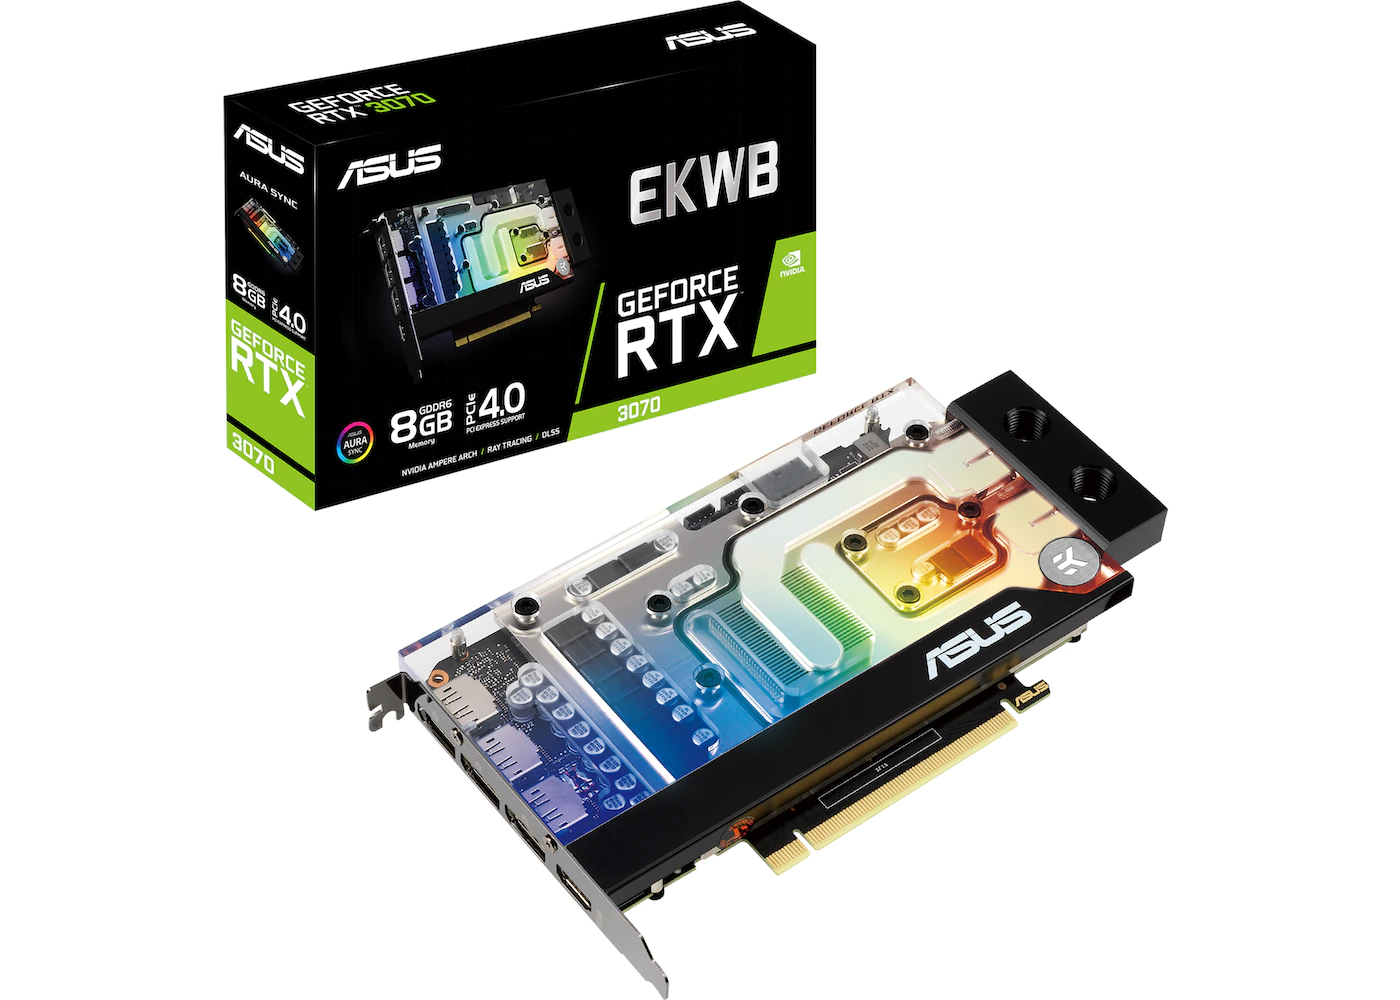 NVIDIA ASUS EKWB GeForce RTX 3070 8GB Graphics Card (RTX3070-8G-EK